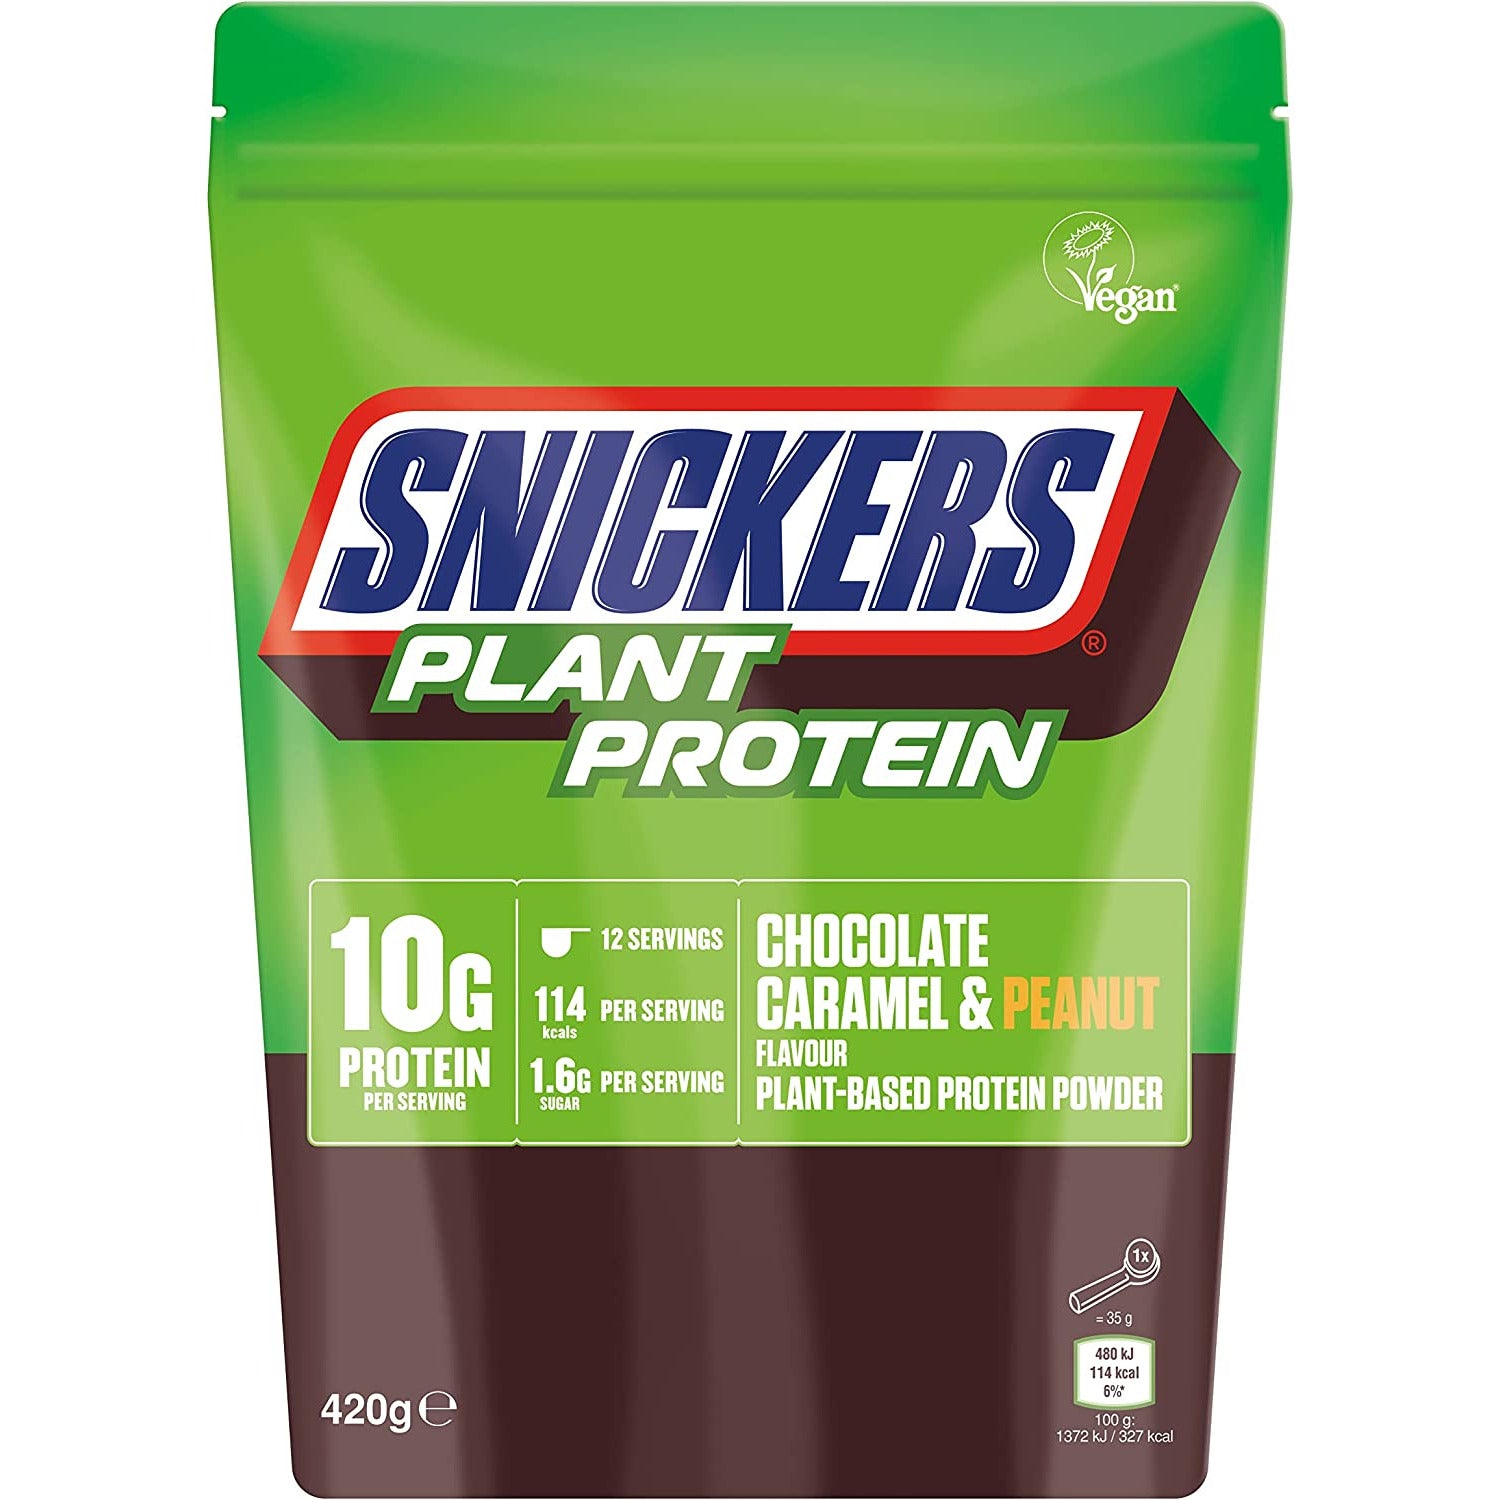 Mars Brand HI PROTEIN VEGAN Protein Powder (420g) Vegan Protein Snickers (Choc Caramel & Peanut) BEST BY SEPT 27, 2023 Mars Brand